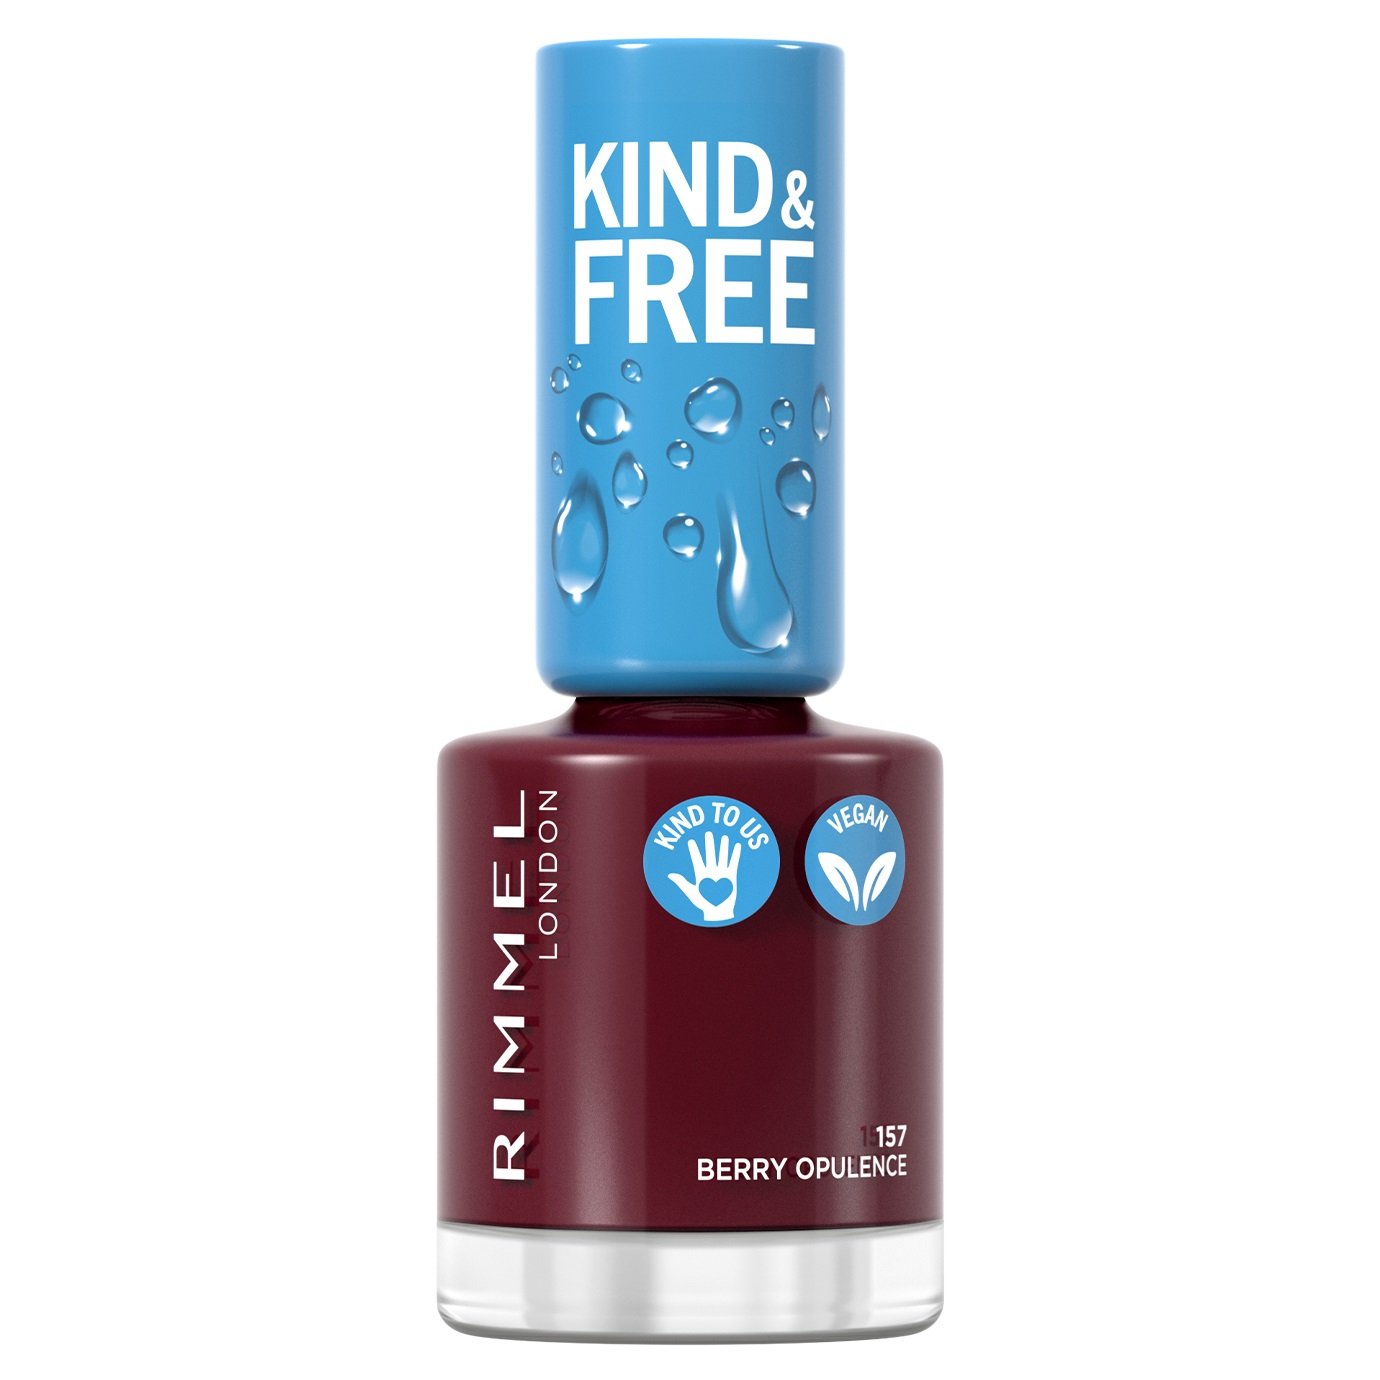 Лак для ногтей Rimmel Kind&Free, тон 157 (Berry Opulence), 8 мл (8000019959406) - фото 1